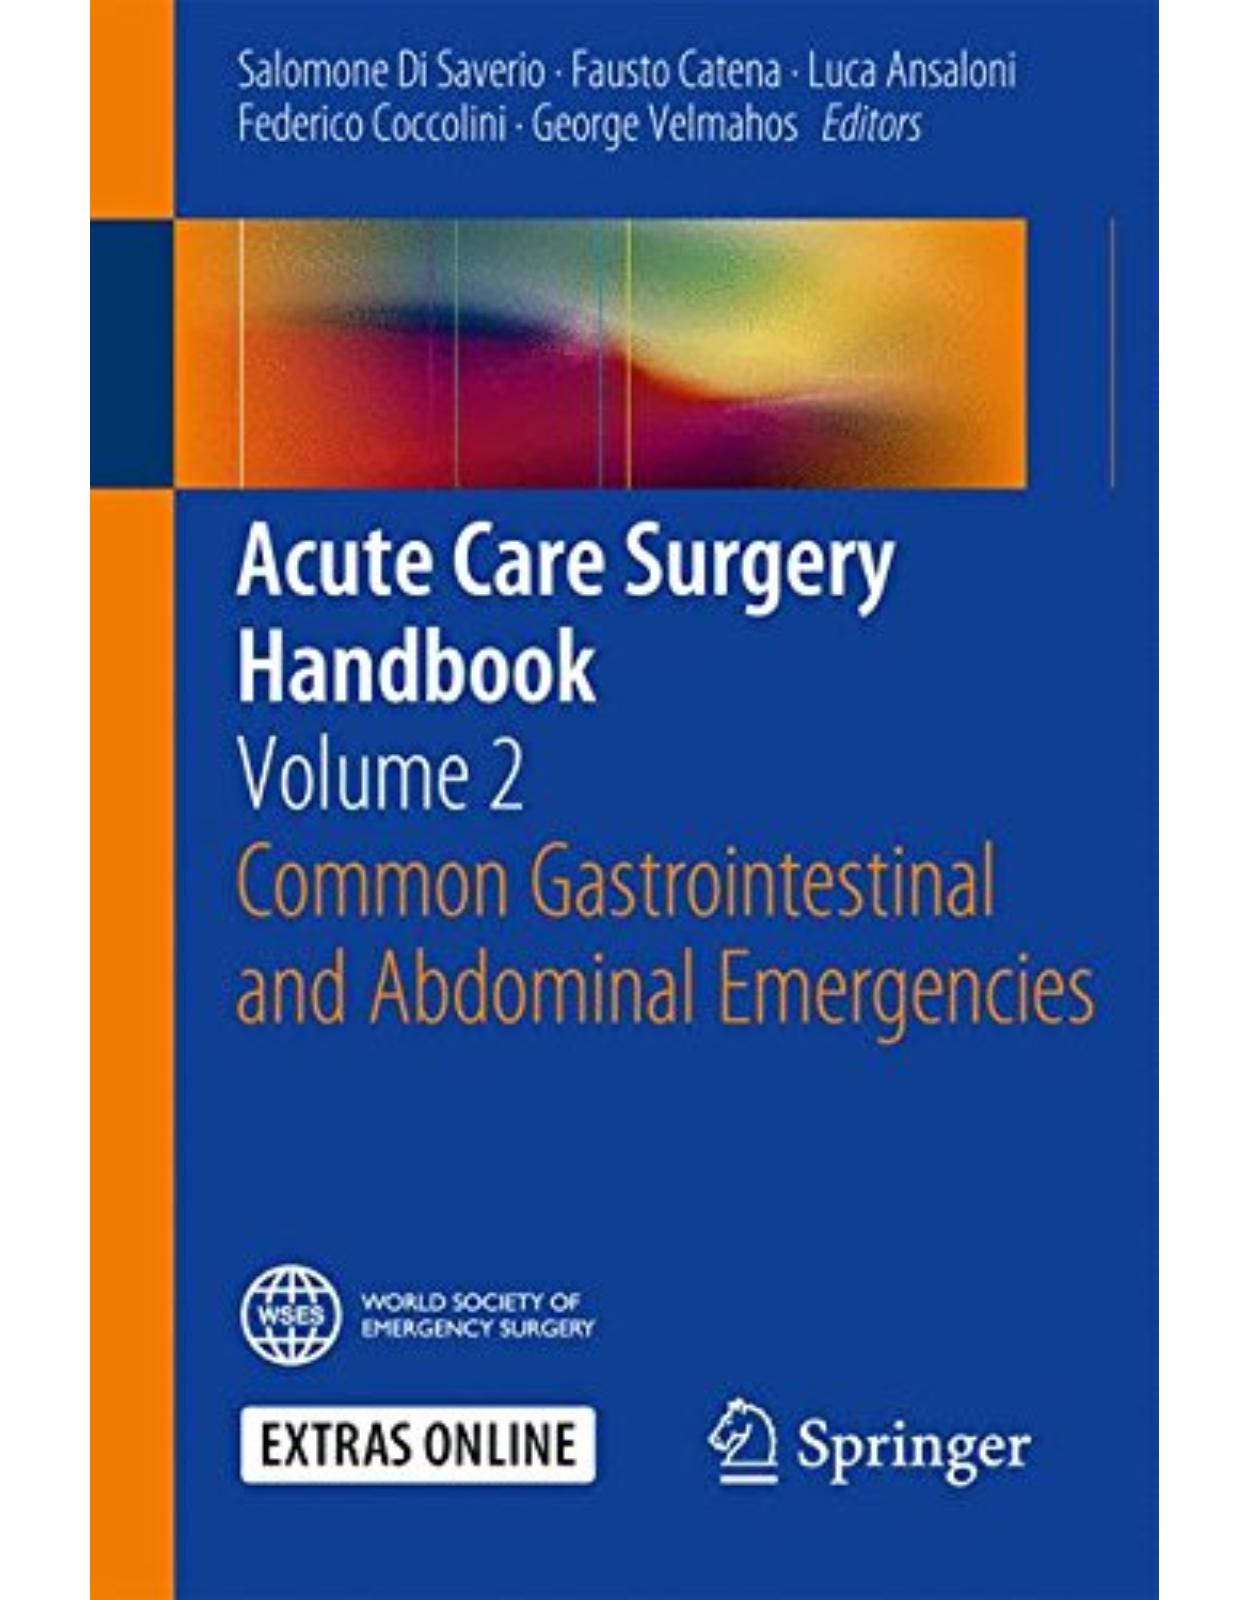 Acute Care Surgery Handbook: Volume 2 Common Gastrointestinal and Abdominal Emergencies 